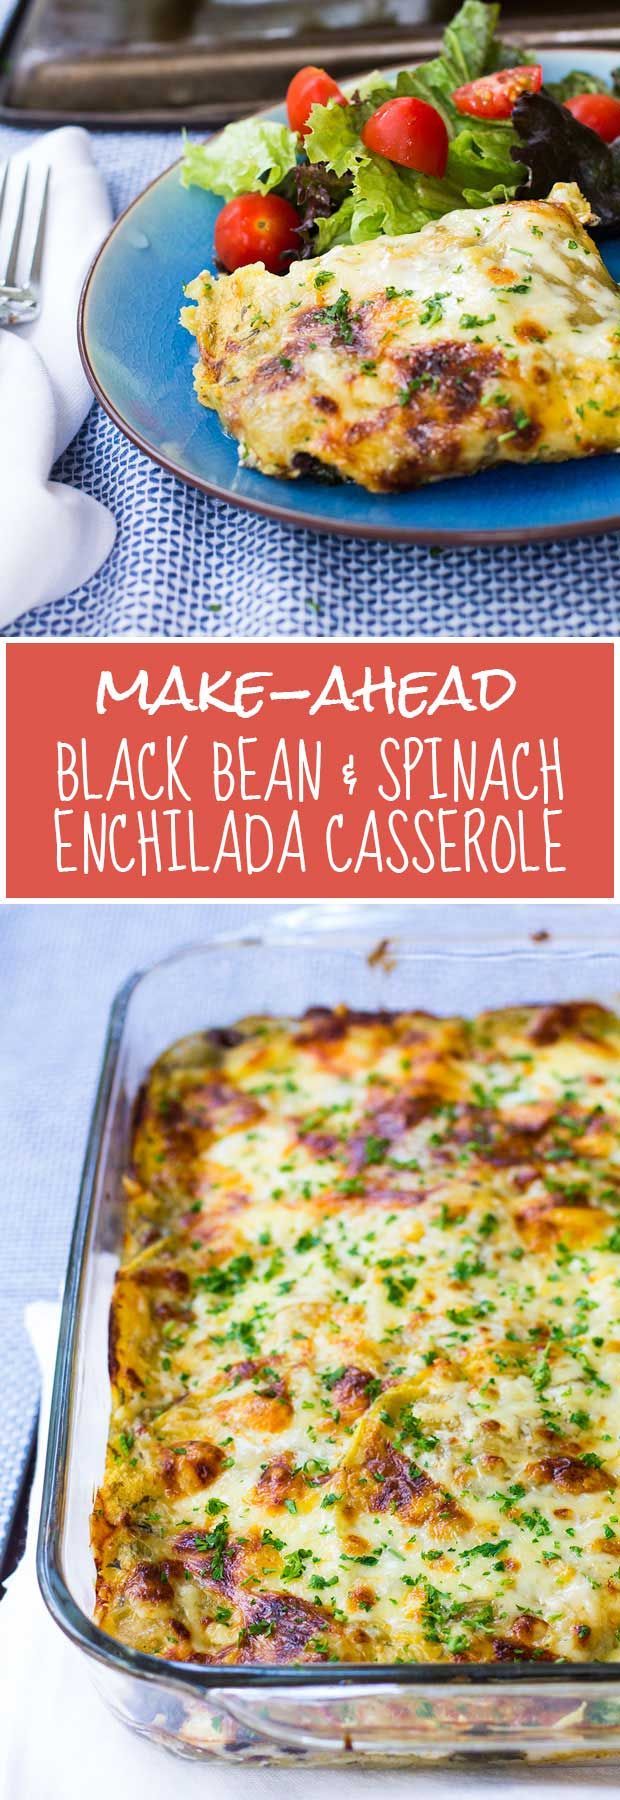 Make-Ahead Black Bean & Enchilada Casserole — an easy, gluten-free, healthy, kid-friendly make-ahead meal! | www.kiwiandbean.com